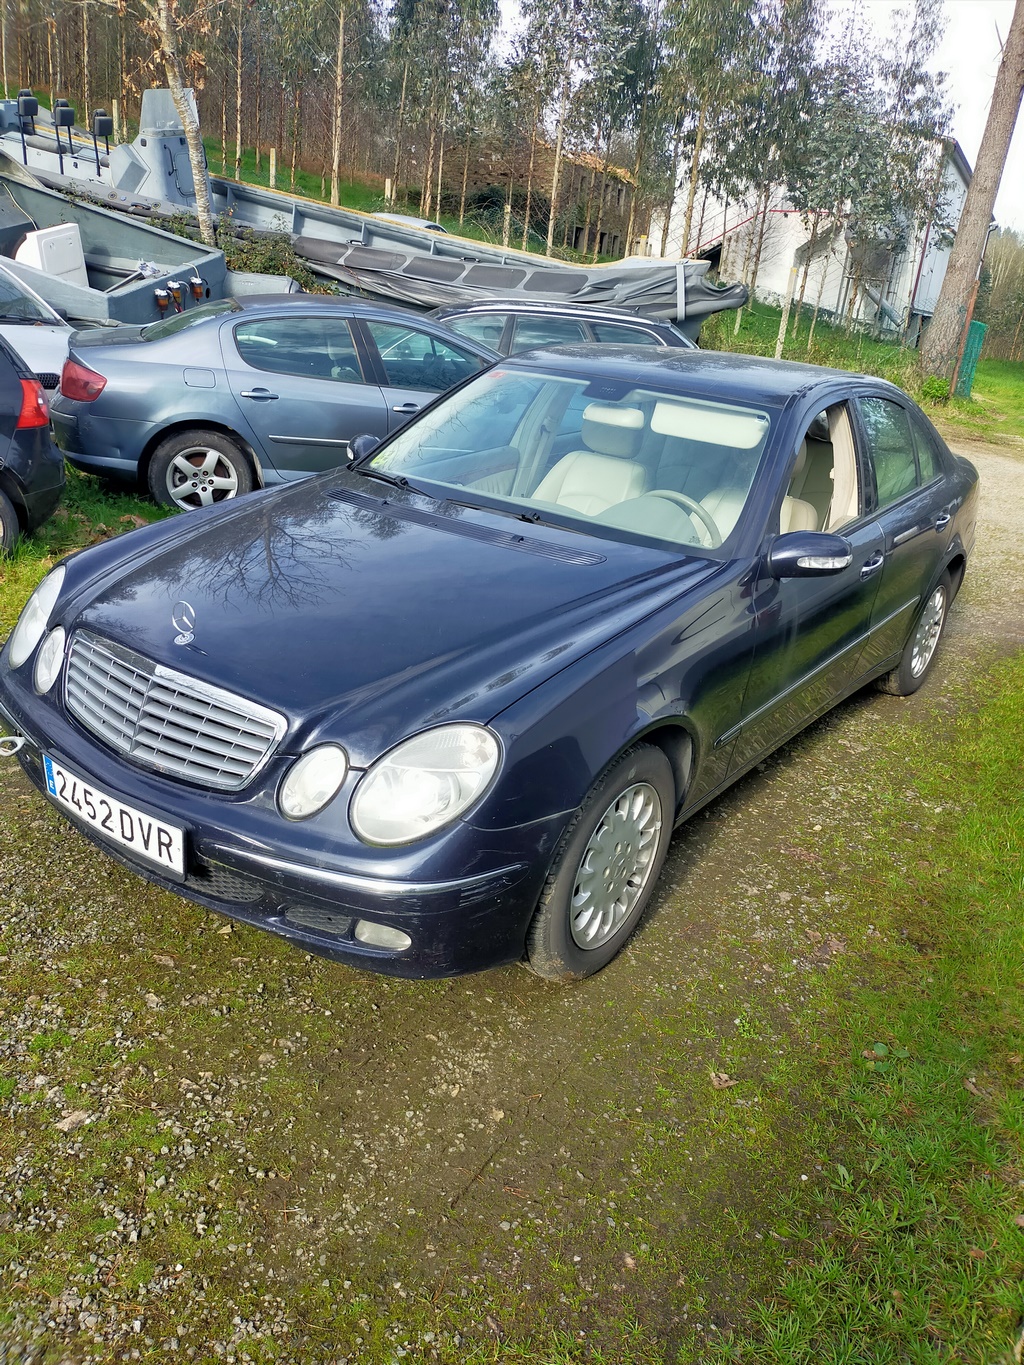 Mercedes Benz E350 CDI. Registration 2452DVR